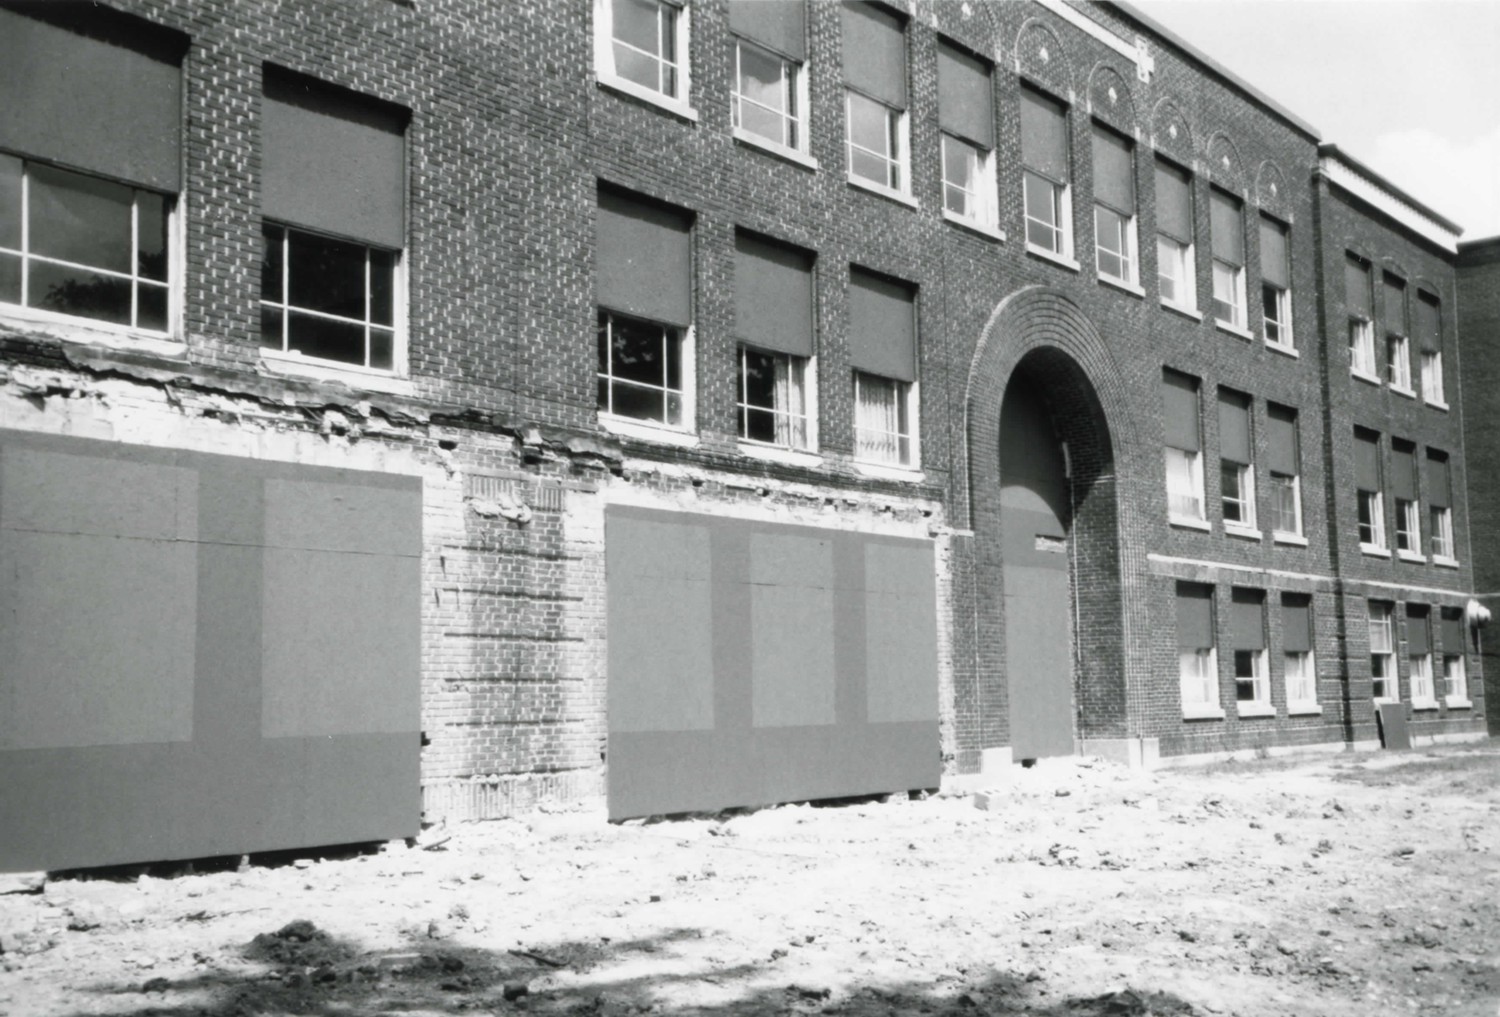 Springfield Township School, Ontario Ohio South elevation (2002)